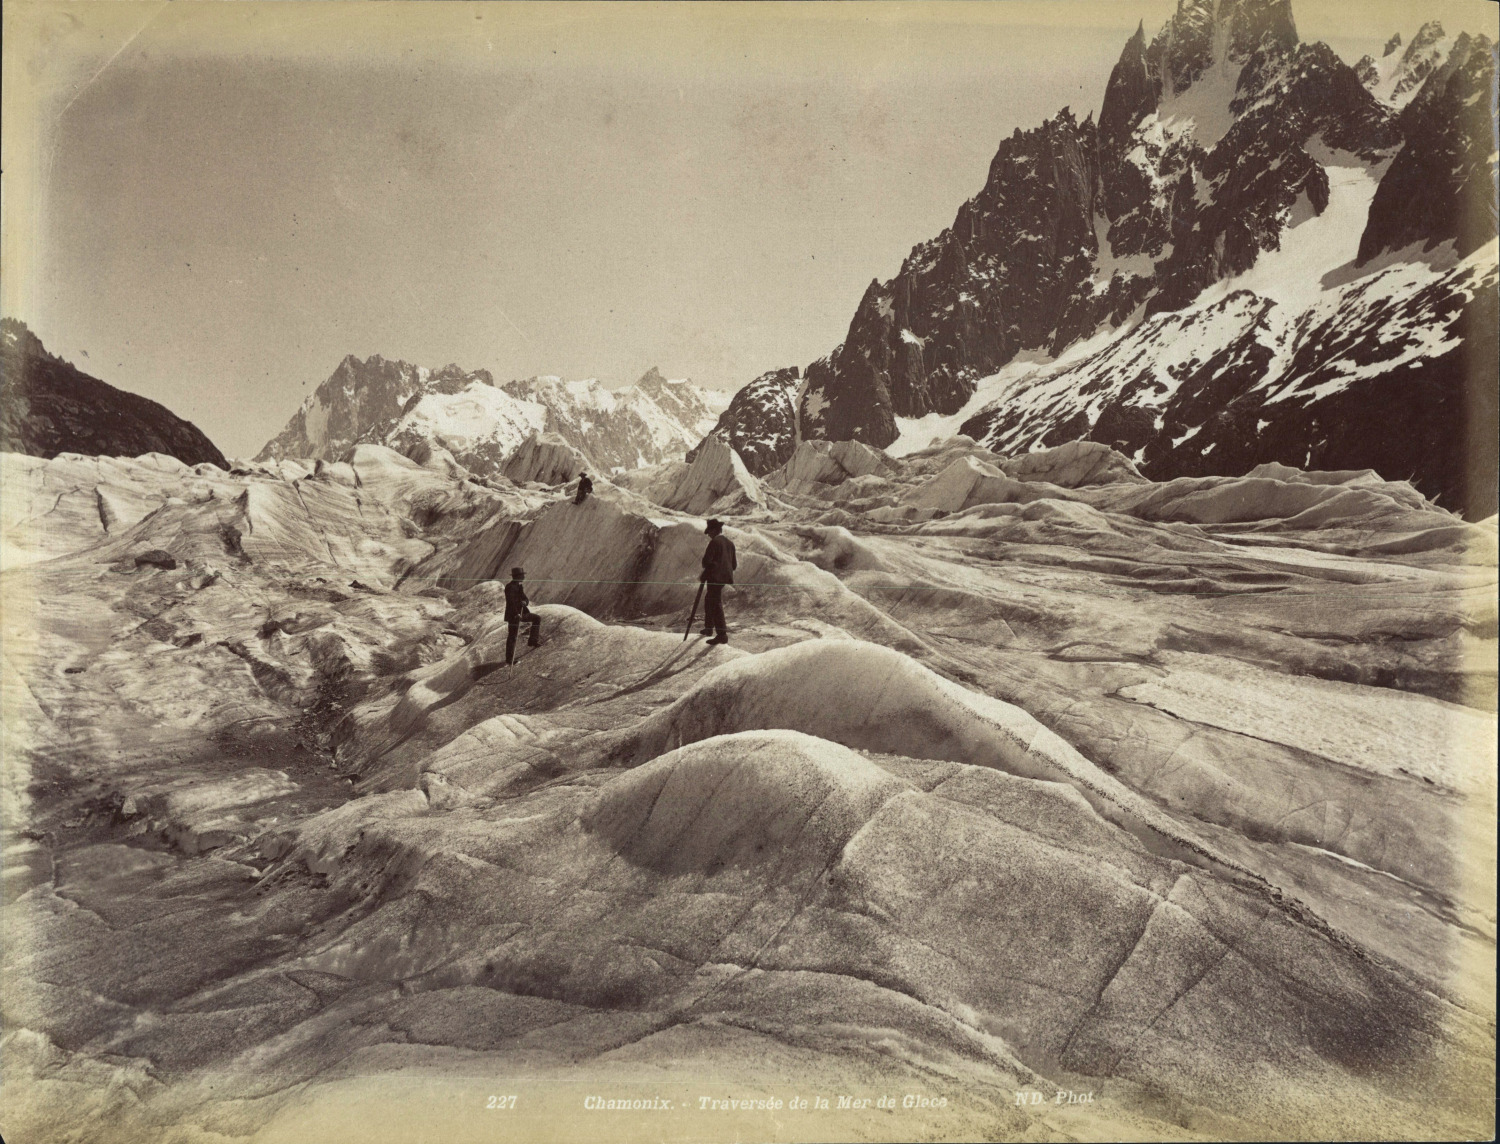 France, Chamonix, Crossing the Sea of Ice, vintage print, ca.1880 print print print vi print